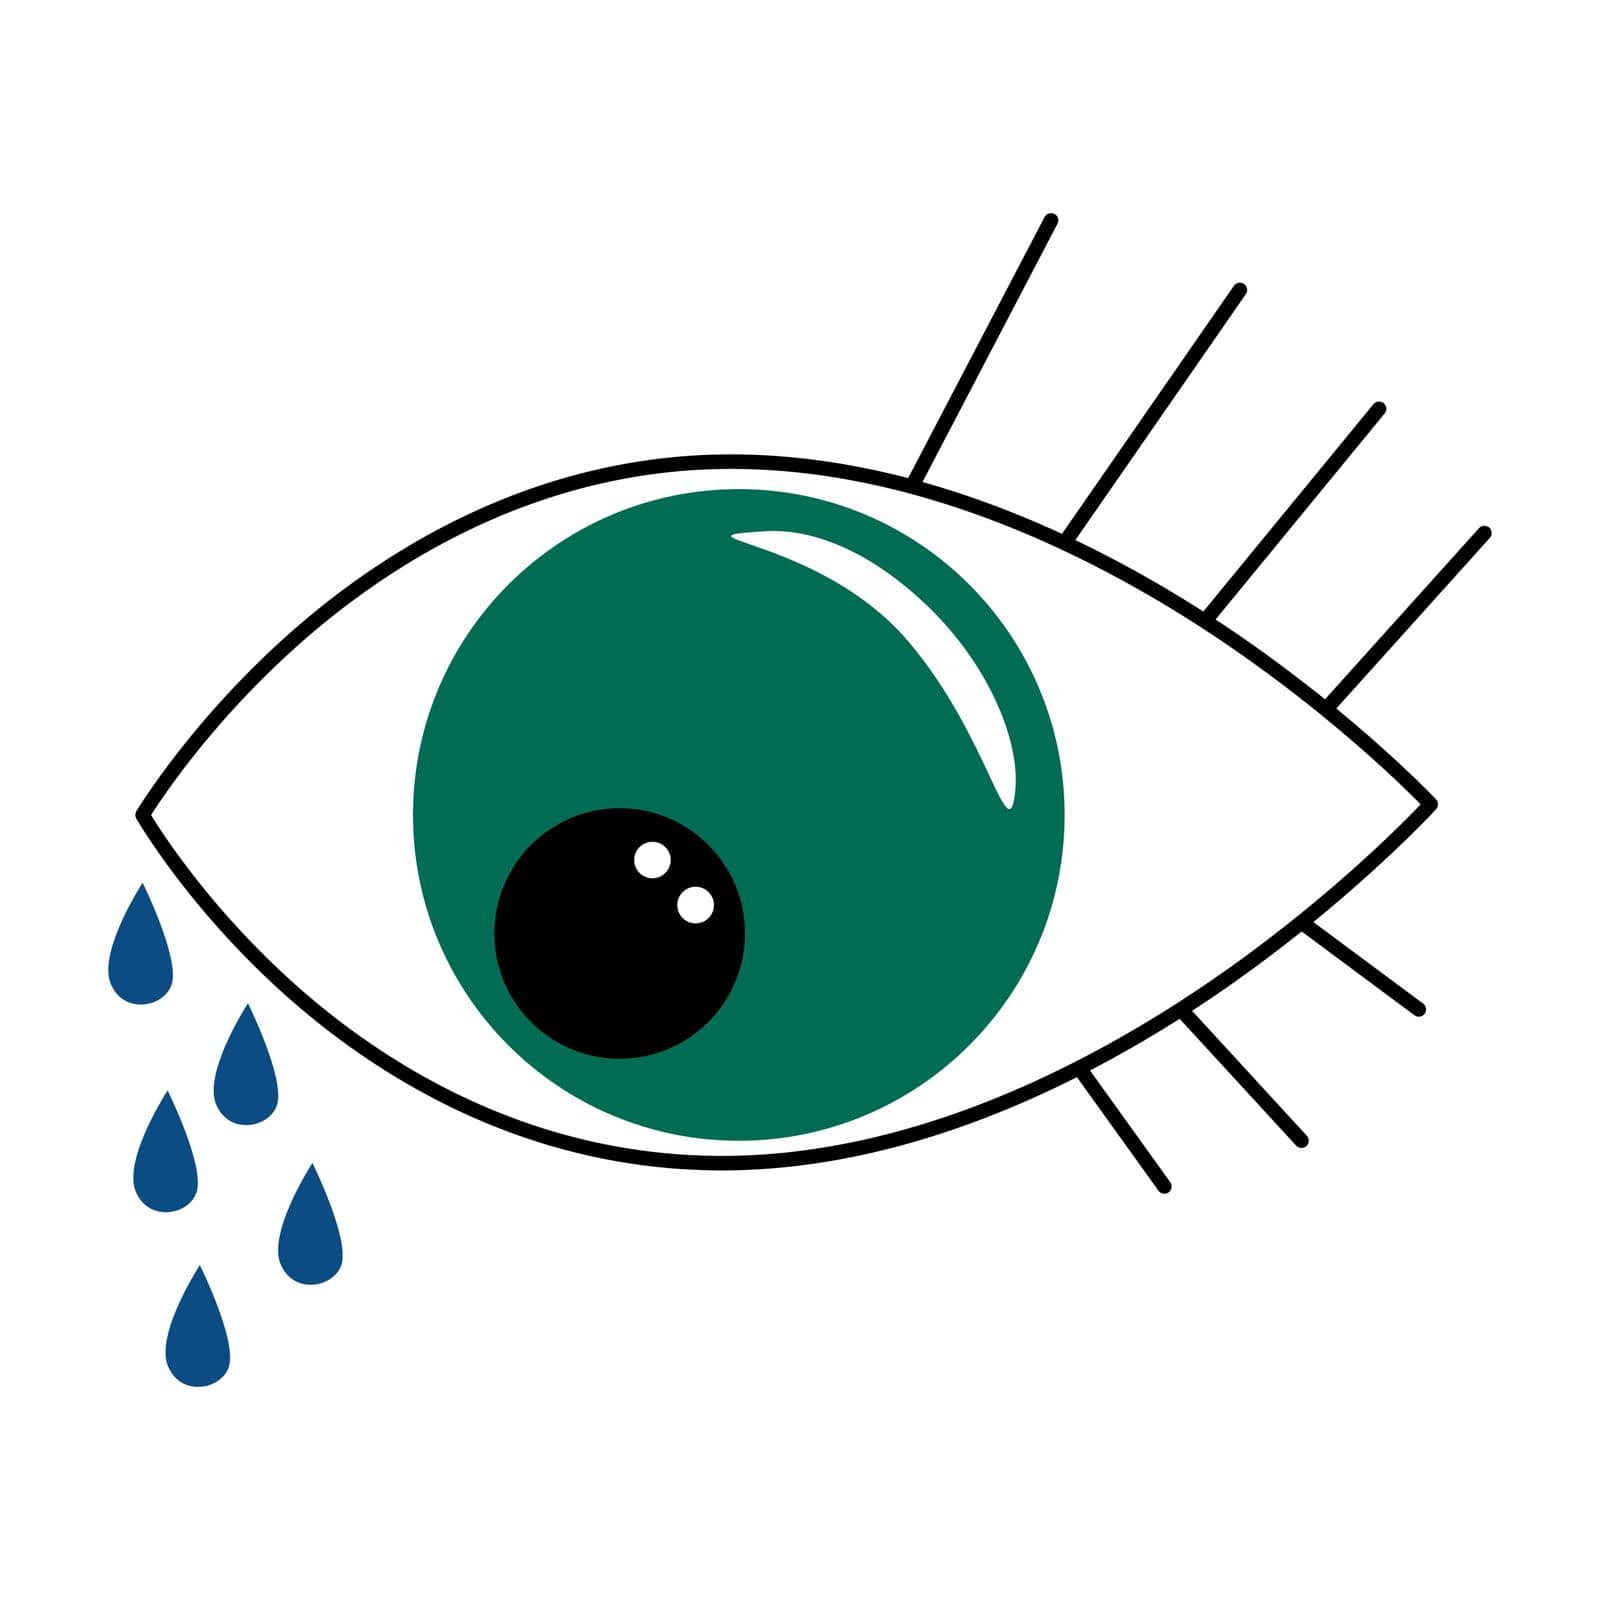 Simple minimalist eye with tears. Crying eye. Tearing Eyeball with tears vector illustration design